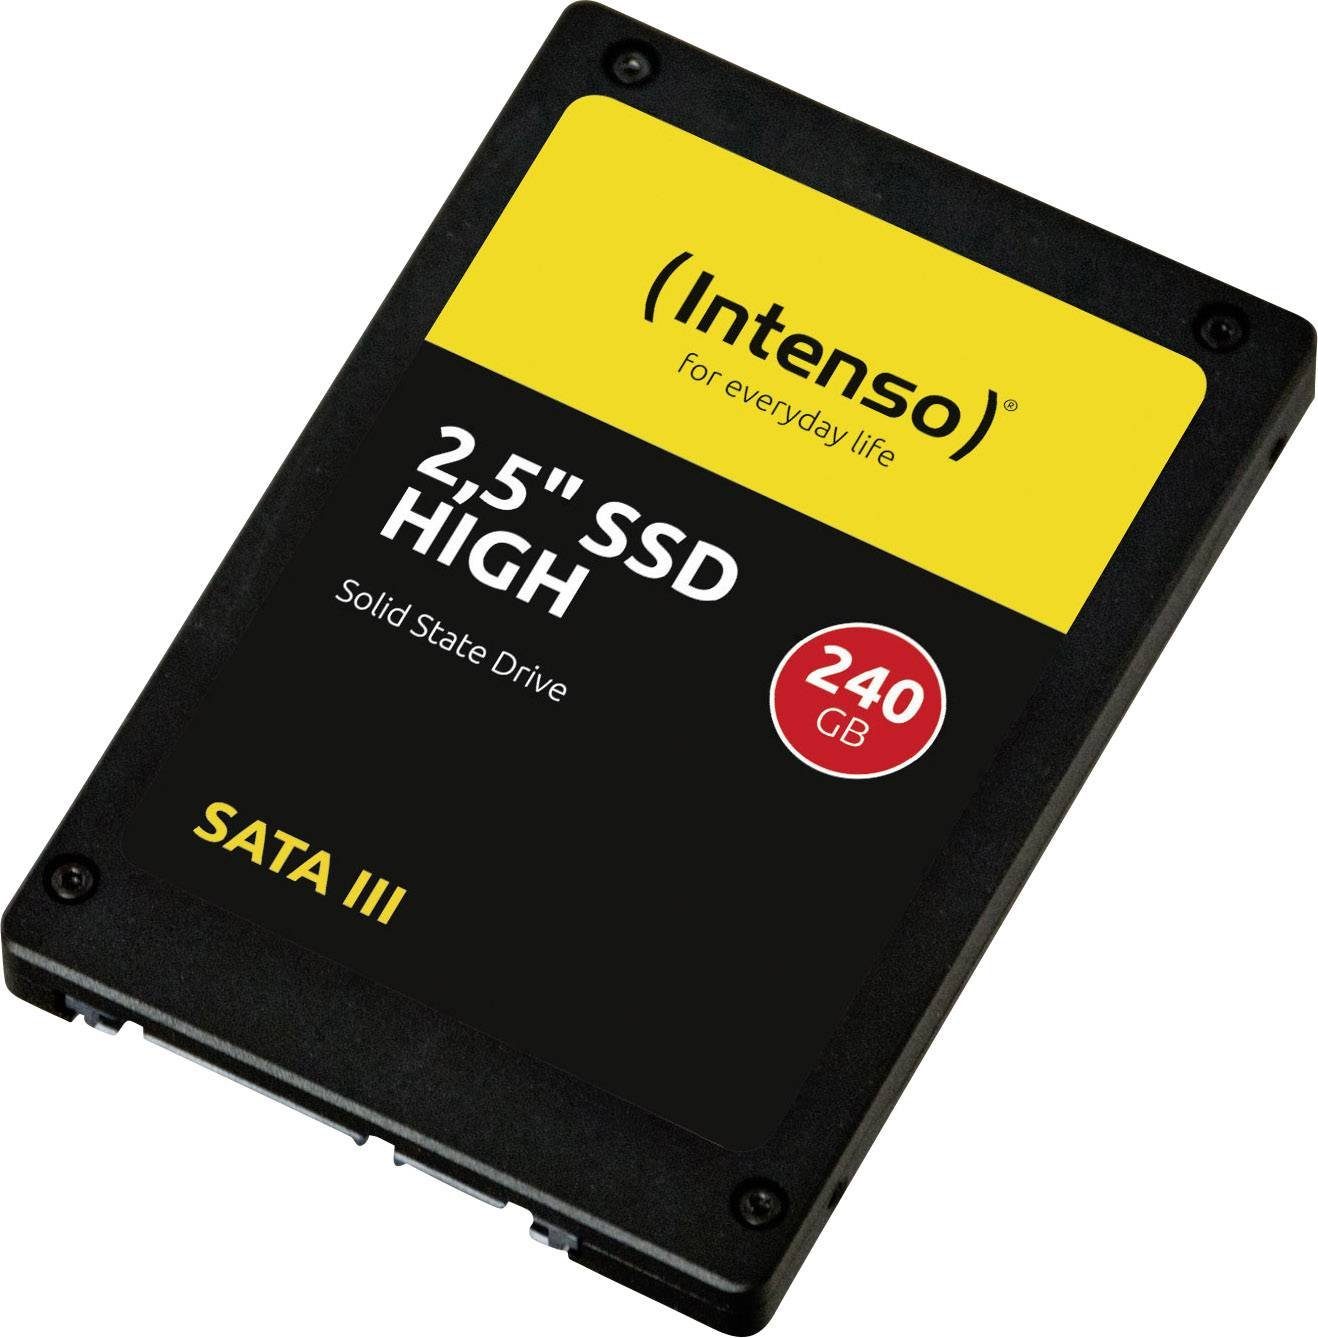 SSD-Festplatte Intenso INTENSO Performance 240GB High